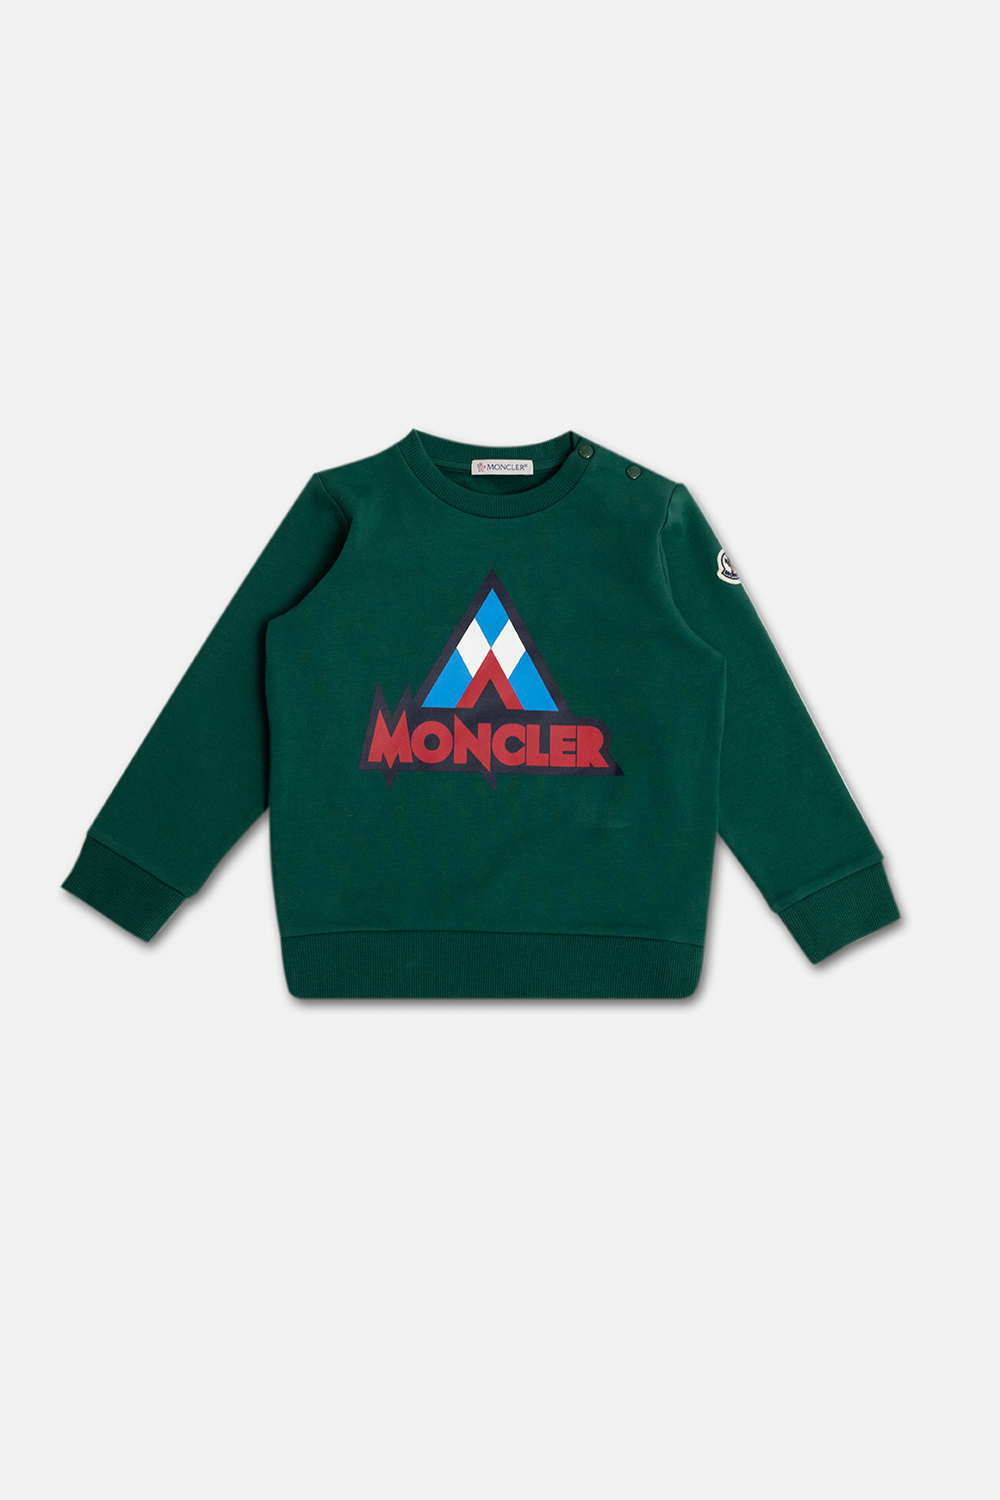 crew print Blu Tommy Moncler sleeve Hilfiger - long - Green T Macao shirt neck - sweatshirt logo in glow - thermal Beatnik StclaircomoShops gray Enfant